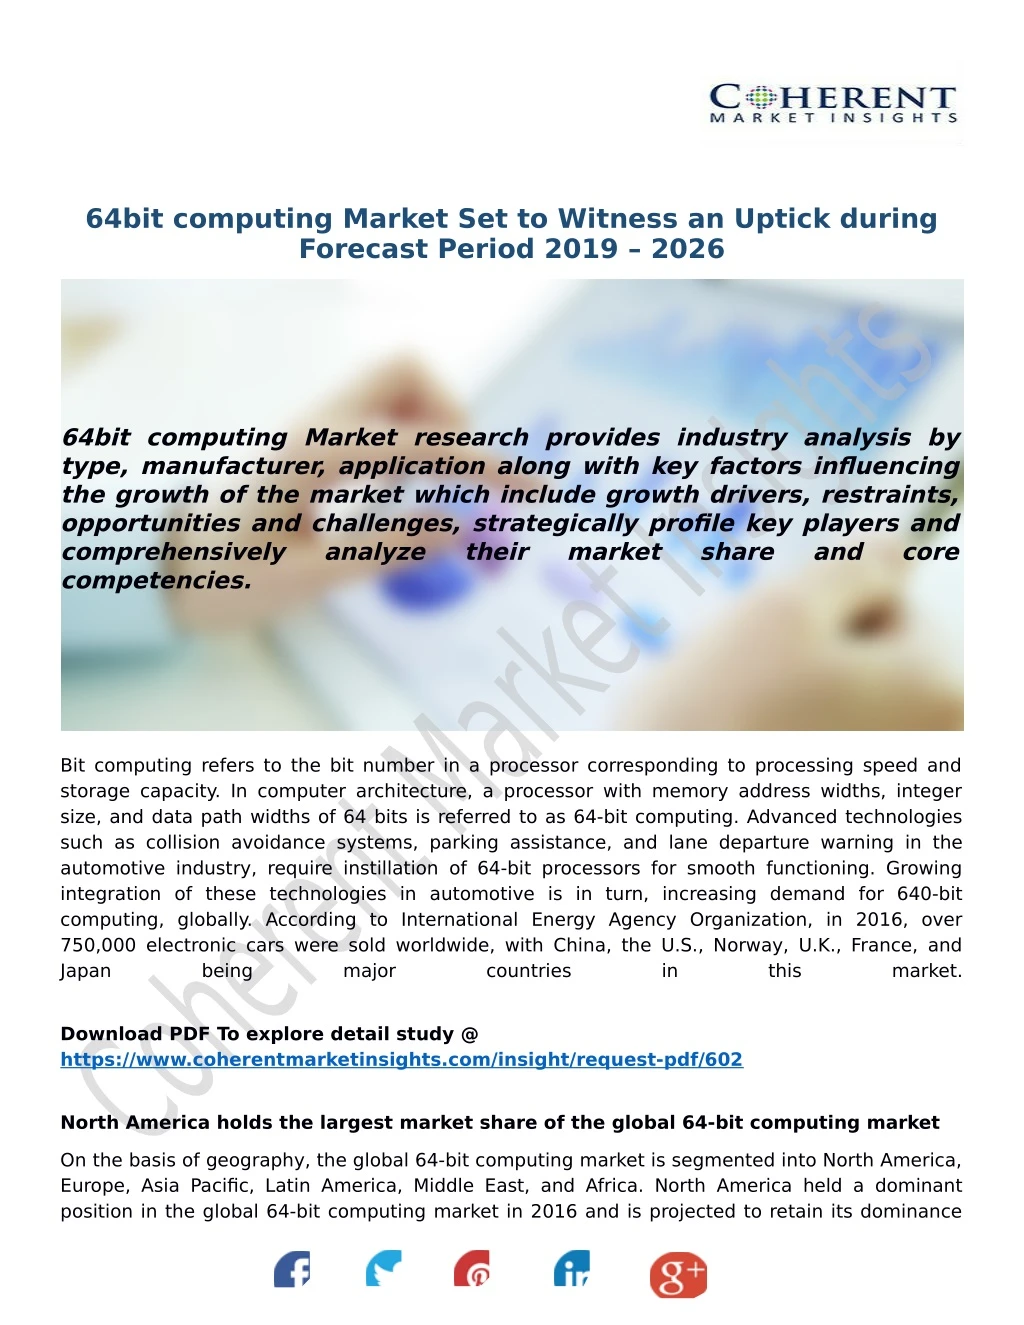 64bit computing market set to witness an uptick